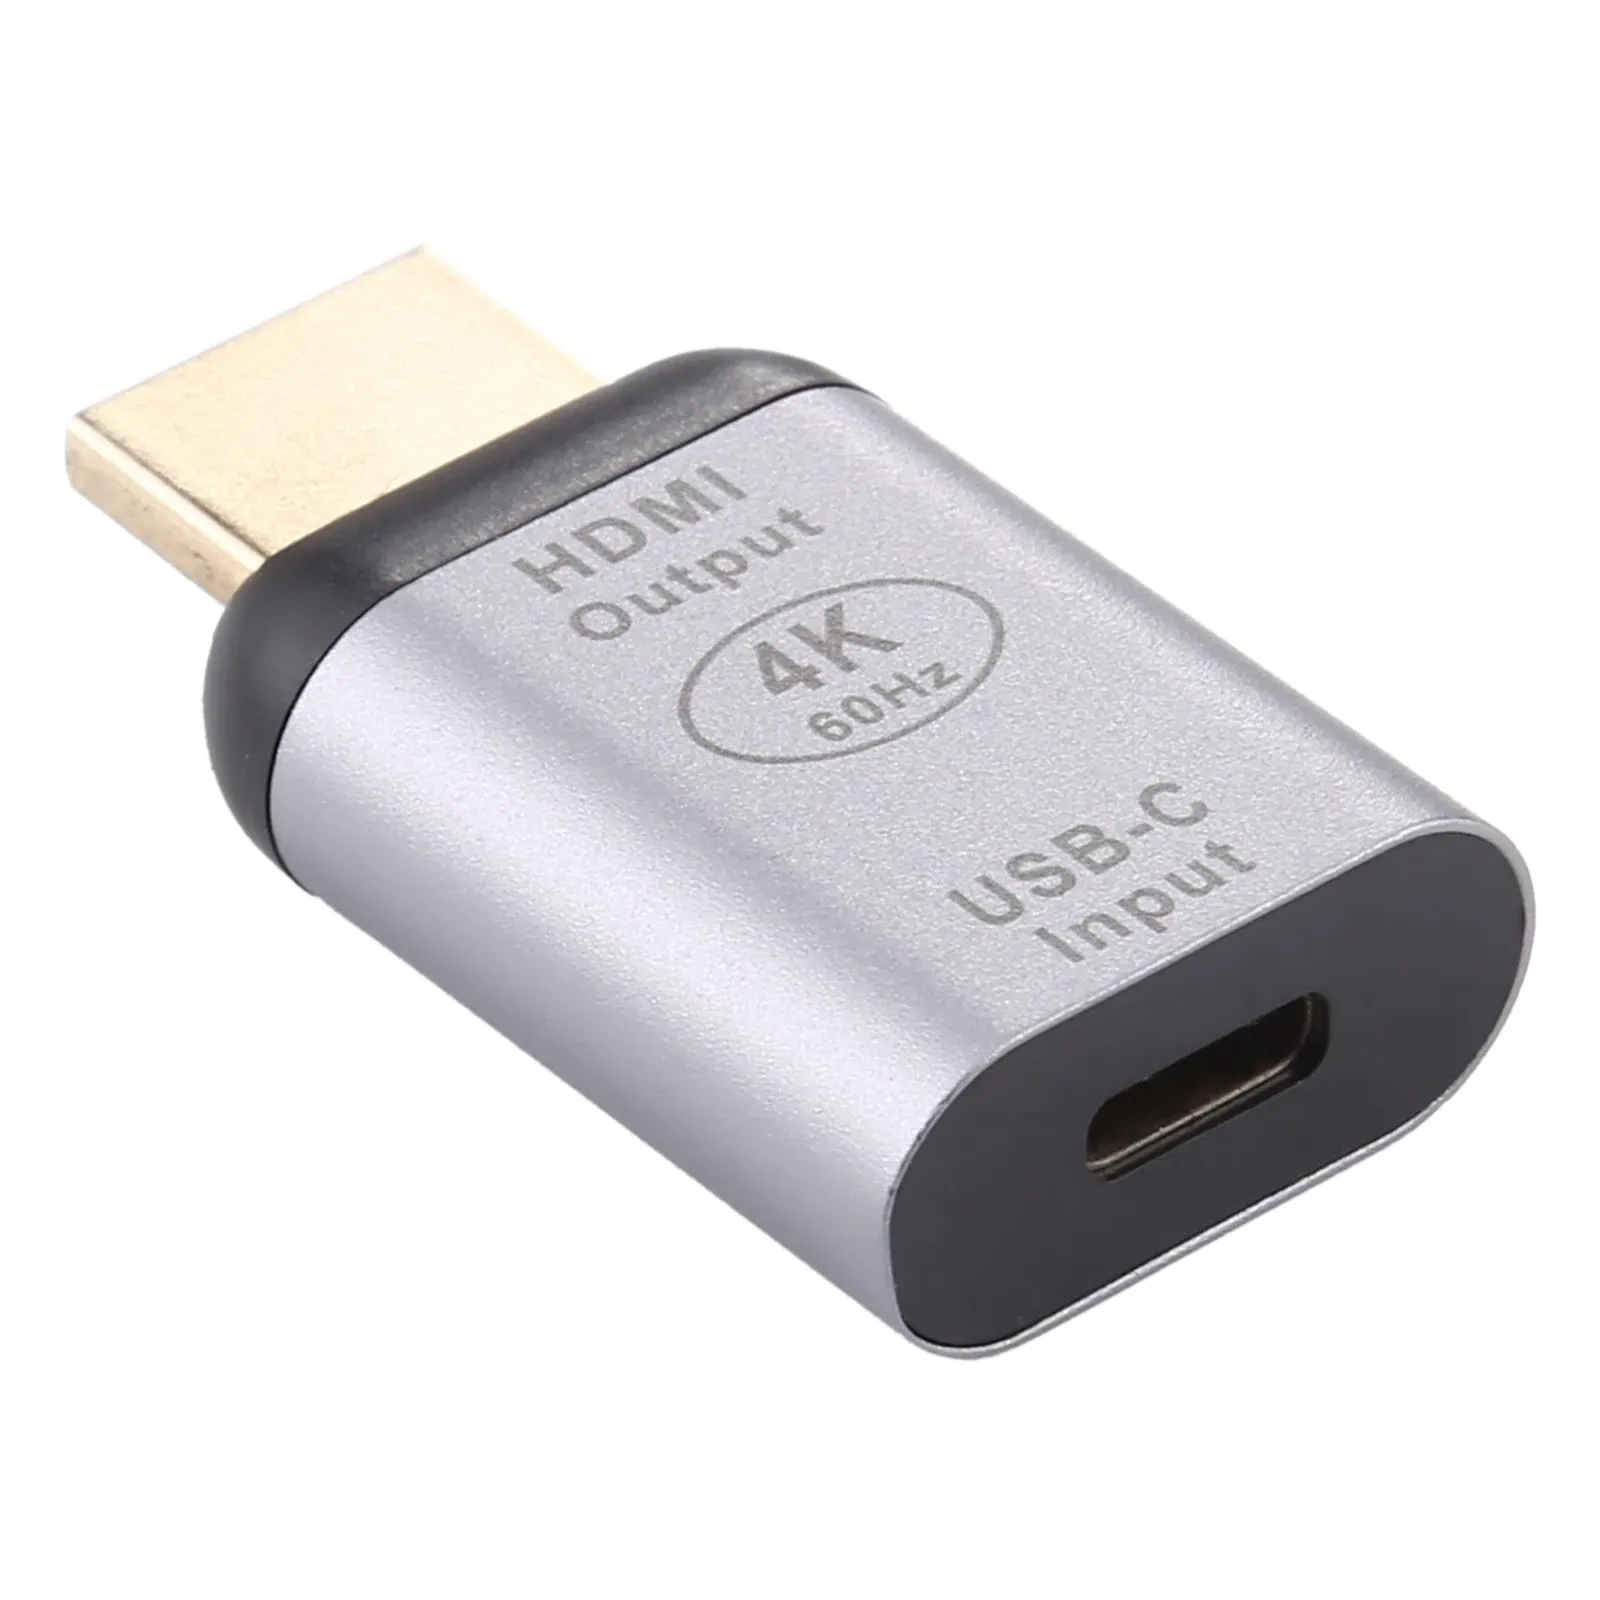 Konwertera adapter ładowarki telefonu TYPEC / USBC Kobieta do HDMI samiec aluminium adapter telefonu komórkowego